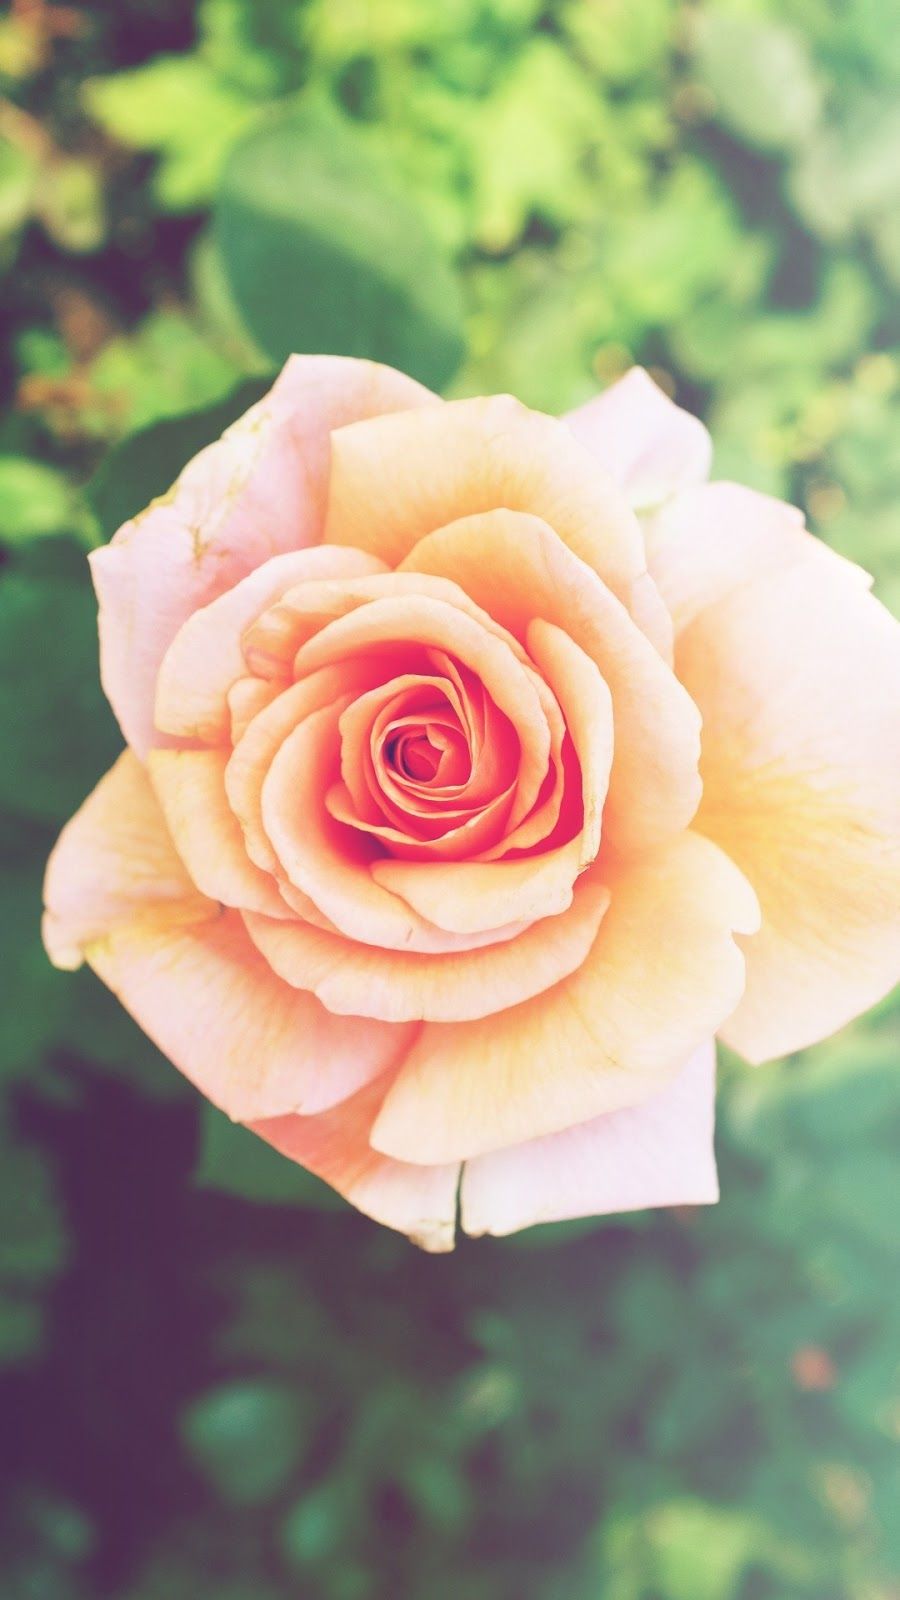 Pink Rose Flower iPhone 6 Plus wallpaper download. iPhone